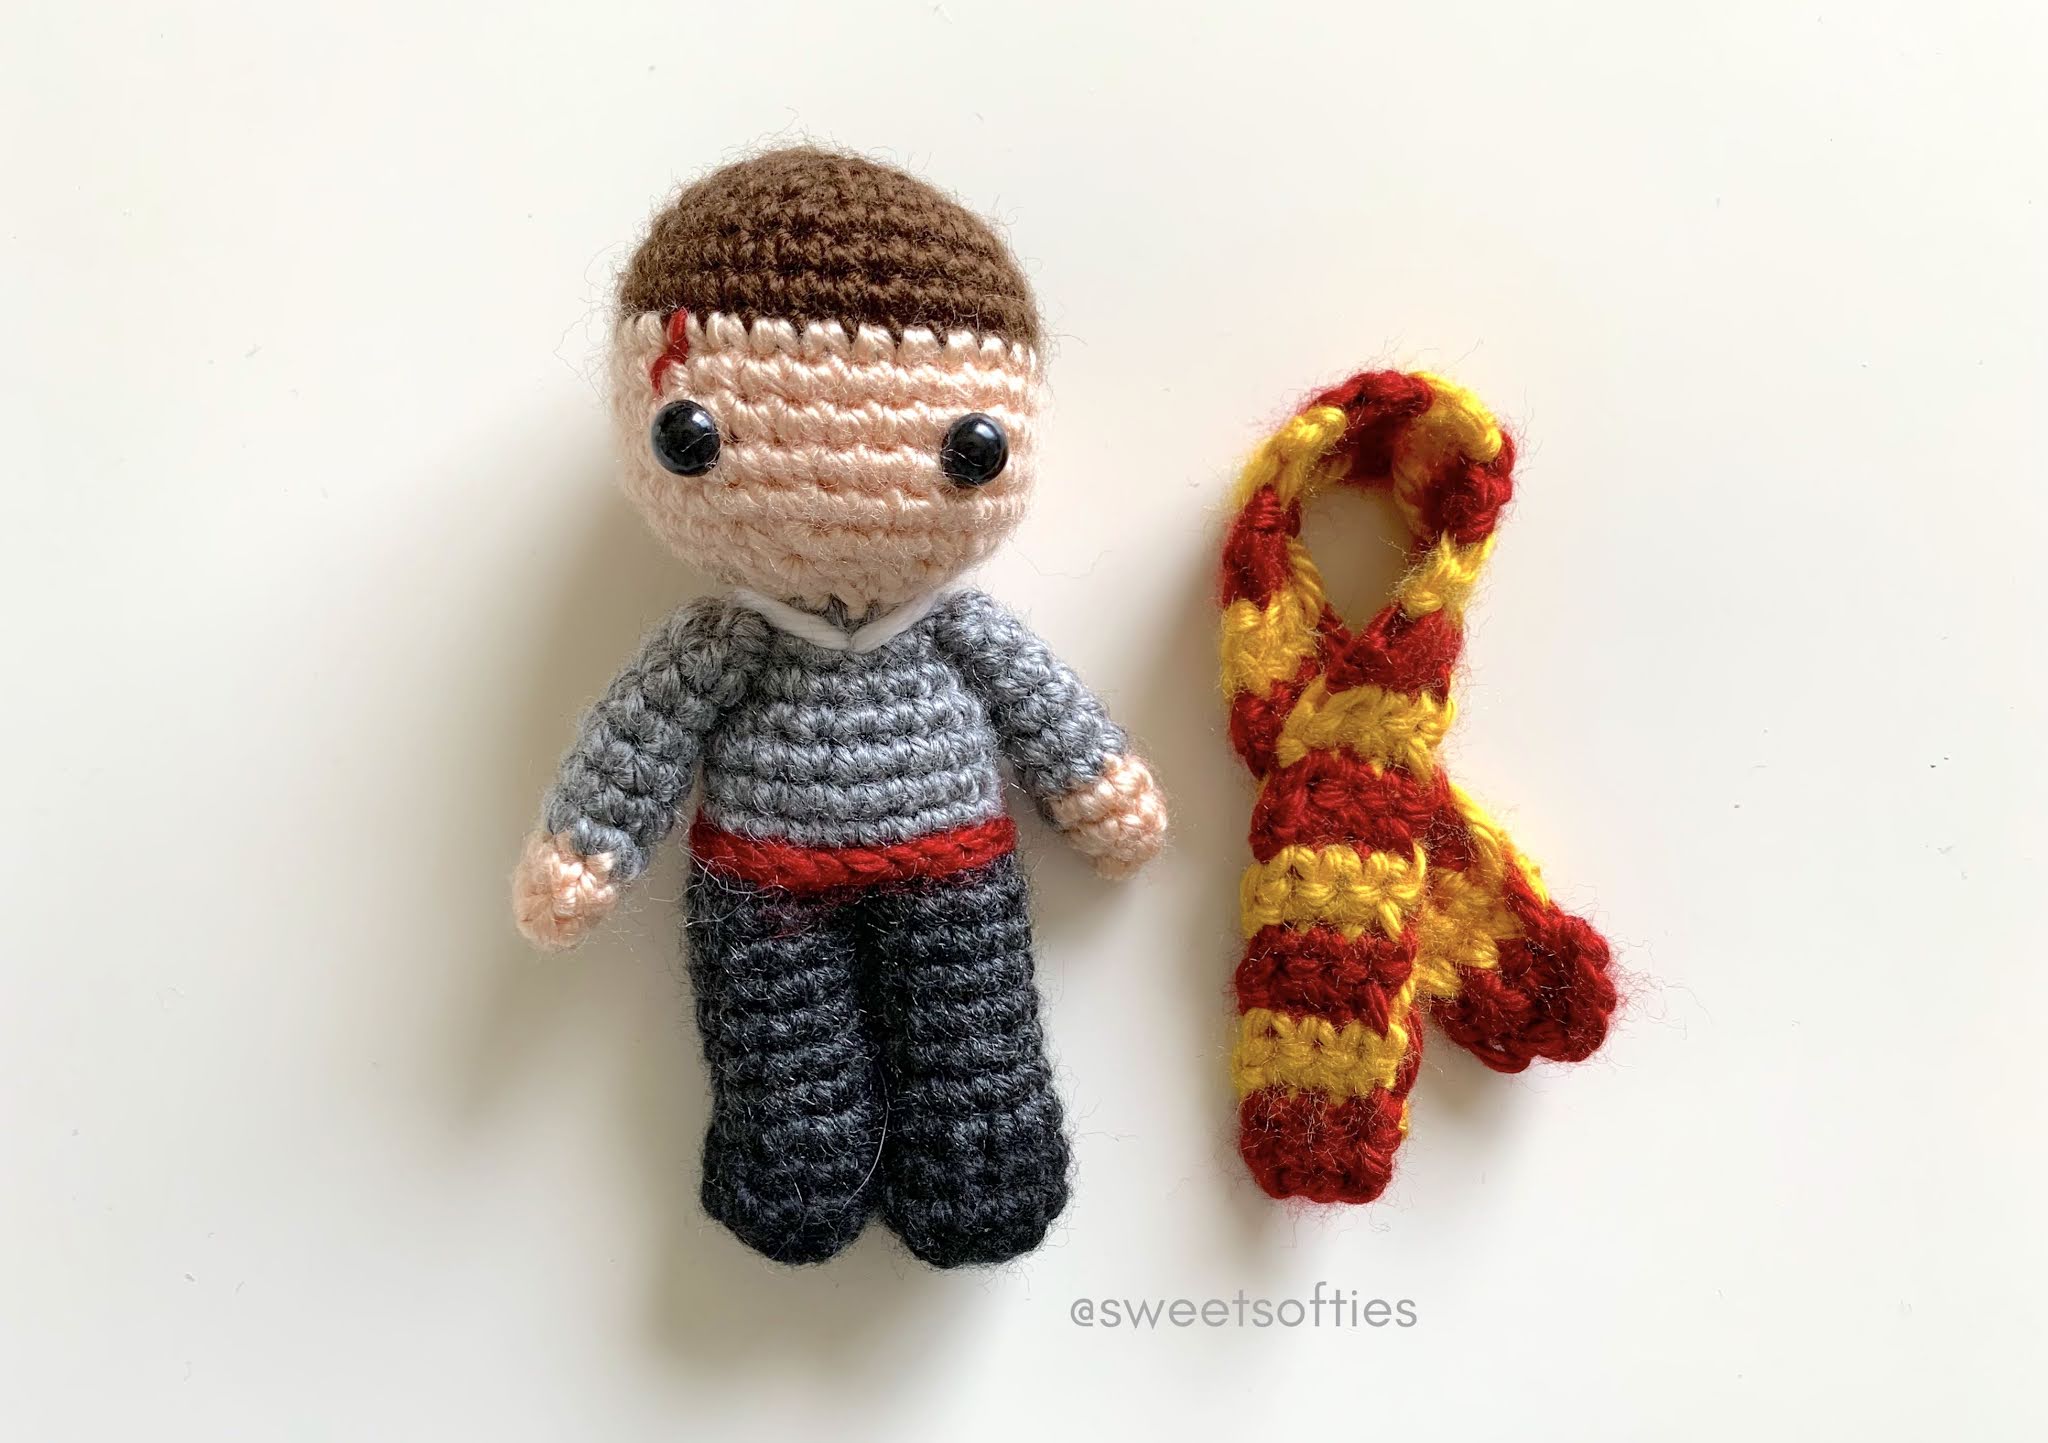 Harry Potter Crochet Series, How to Crochet Harry Potter Amigurumi  Pattern